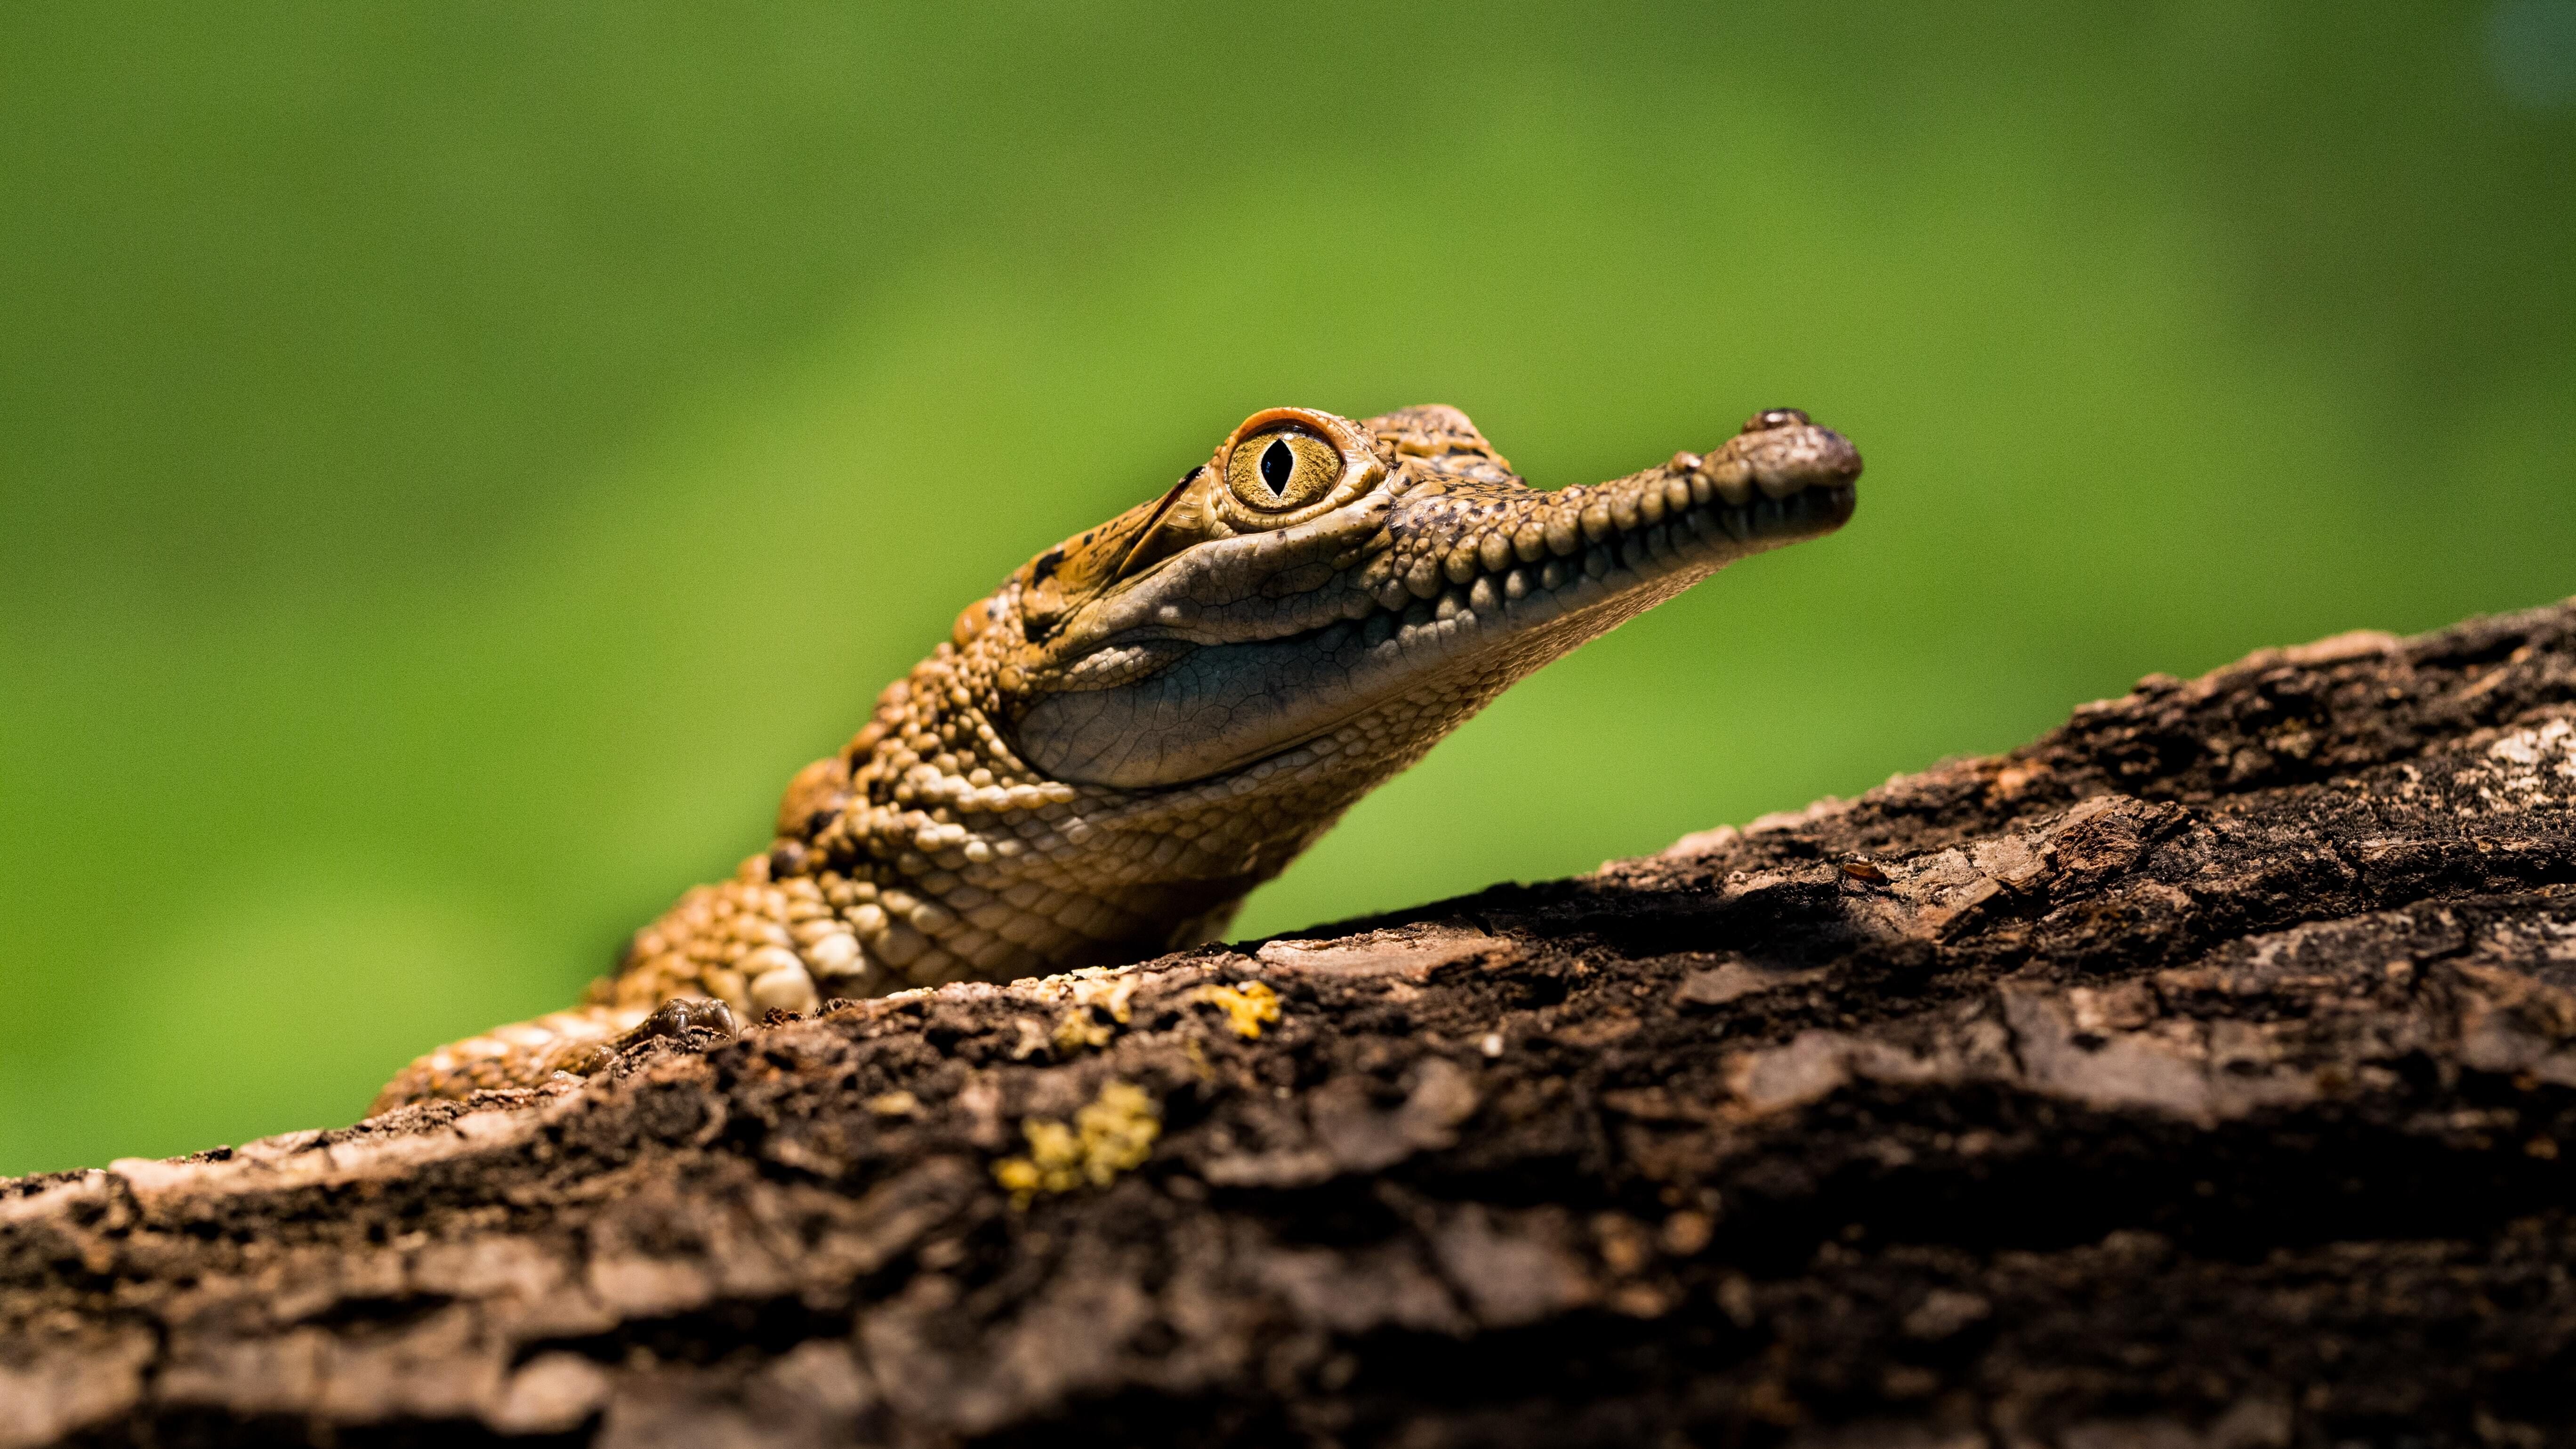 Testudines and Crocodilia at risk